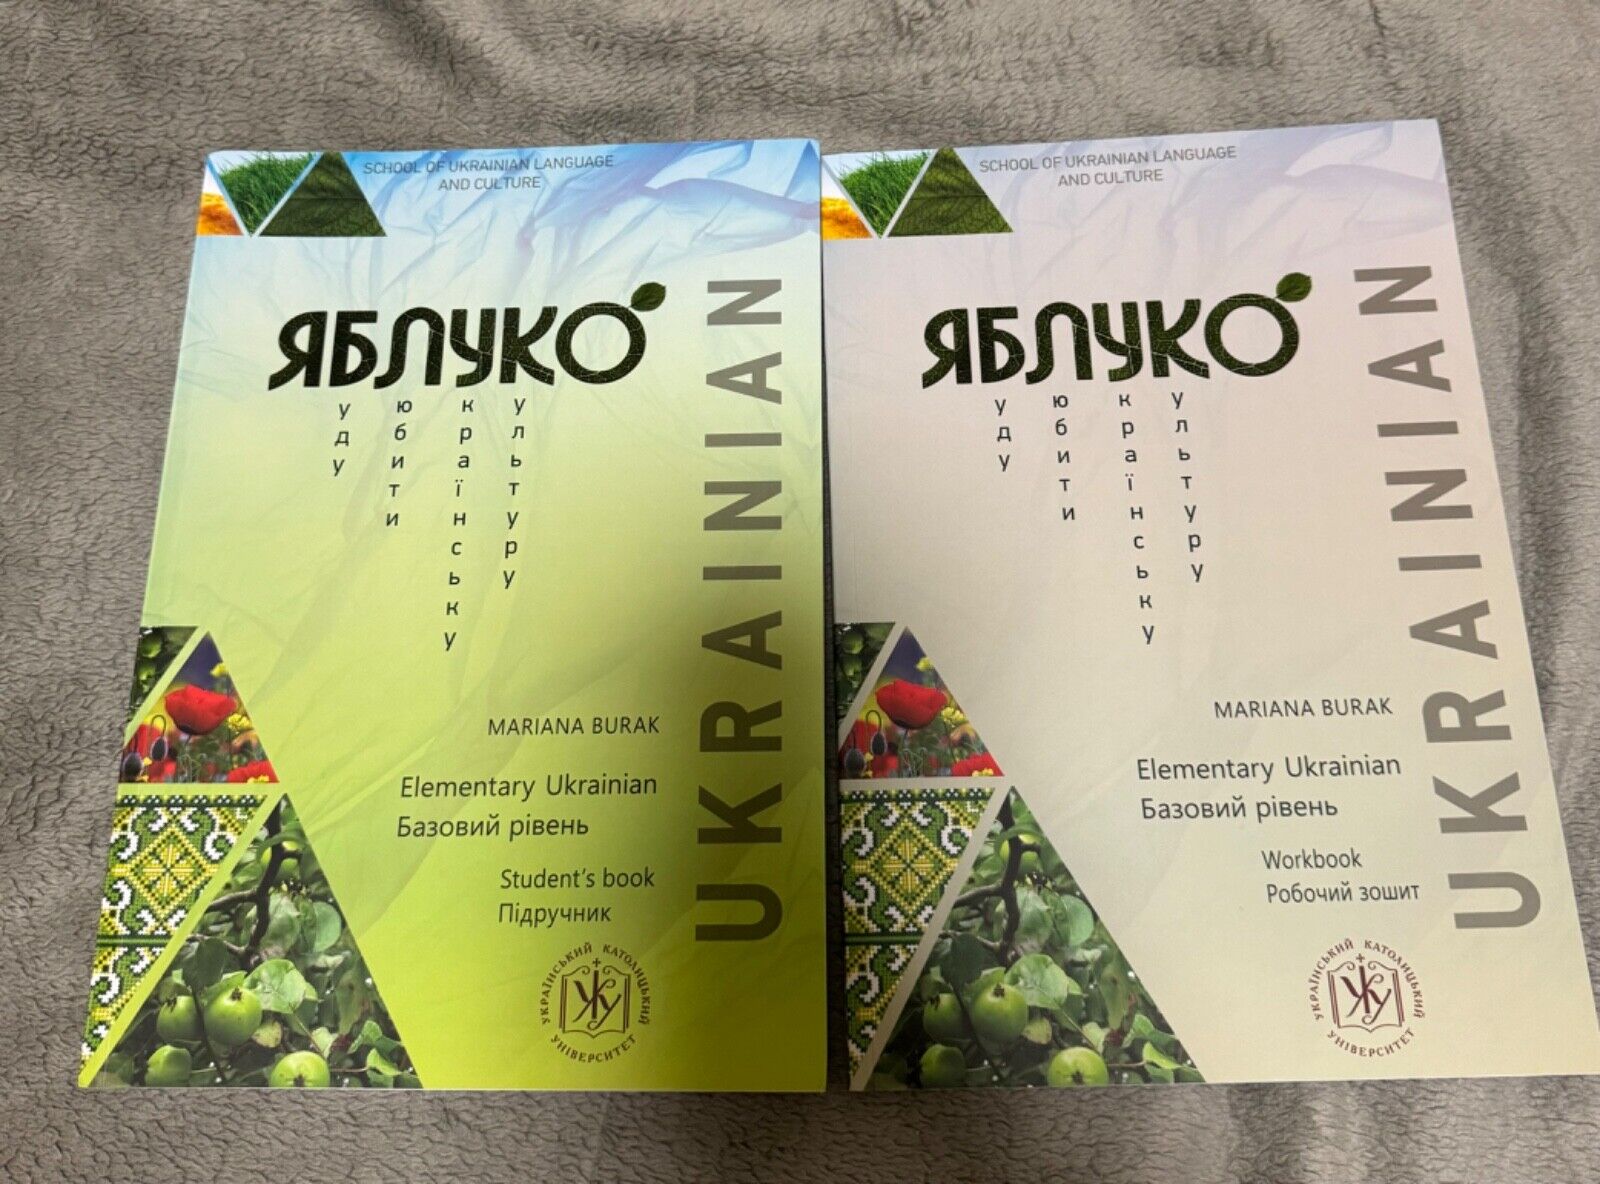 Yabluko (Яблуко) Elementary Ukrainian Textbook (Student’s Book + Workbook) NEW